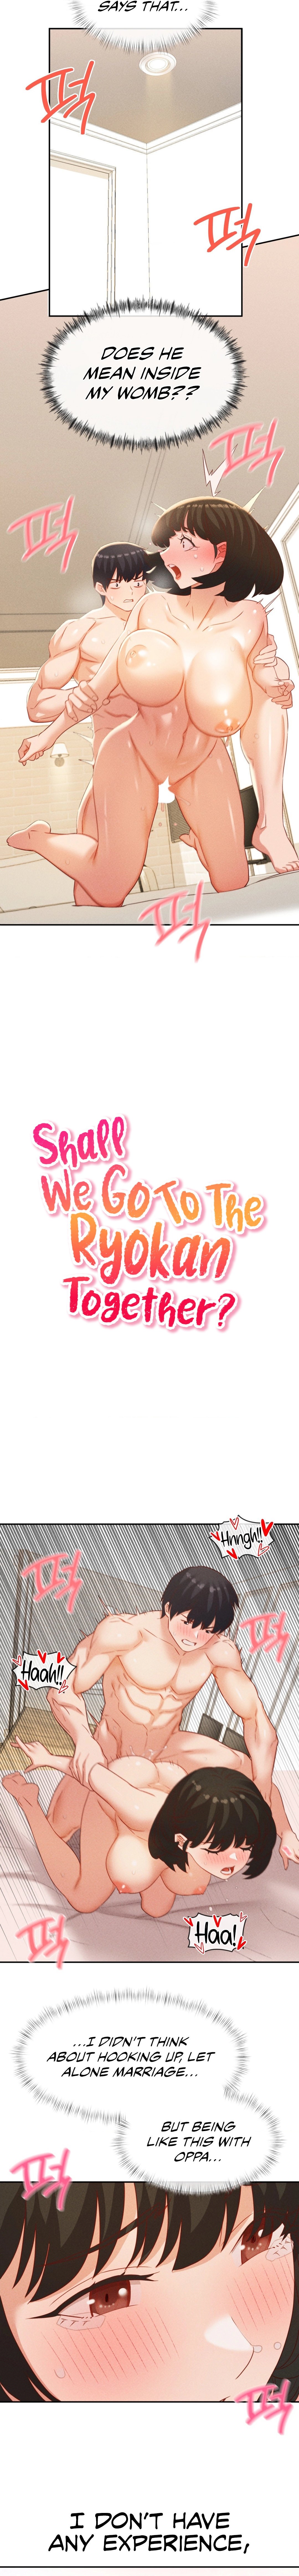 shall-we-go-to-the-ryokan-together-chap-23-2